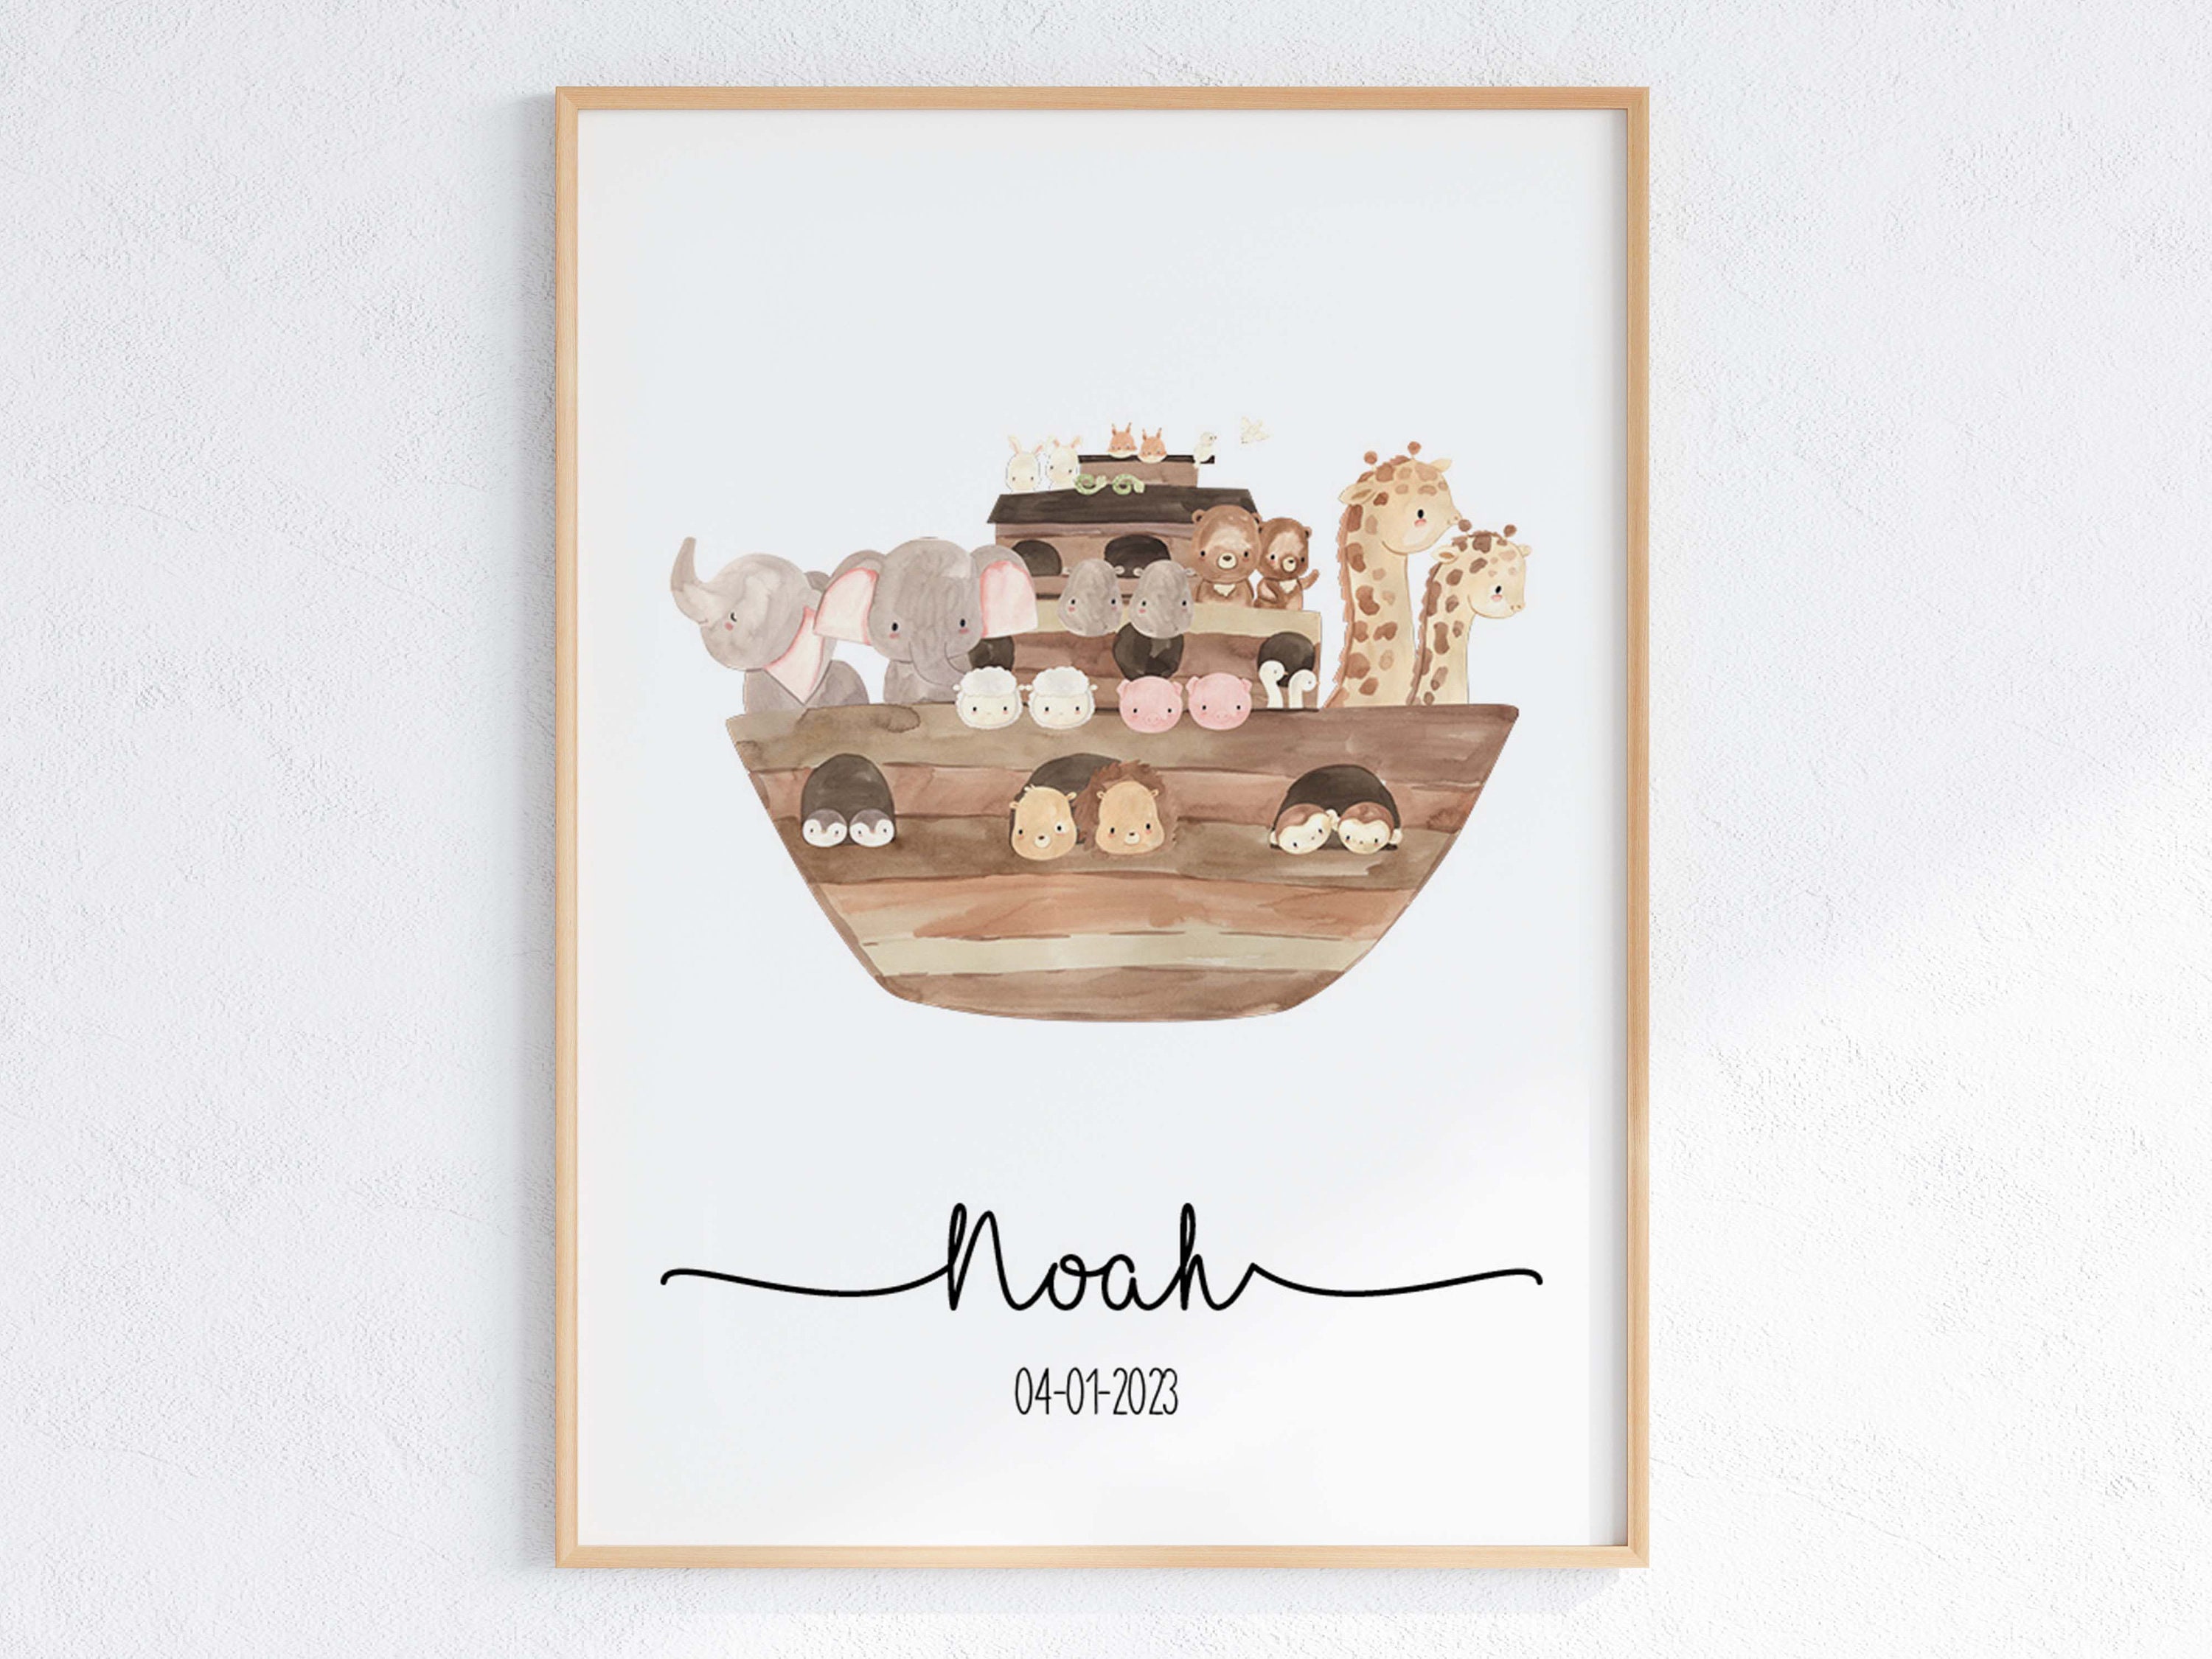 Noah's ark poster